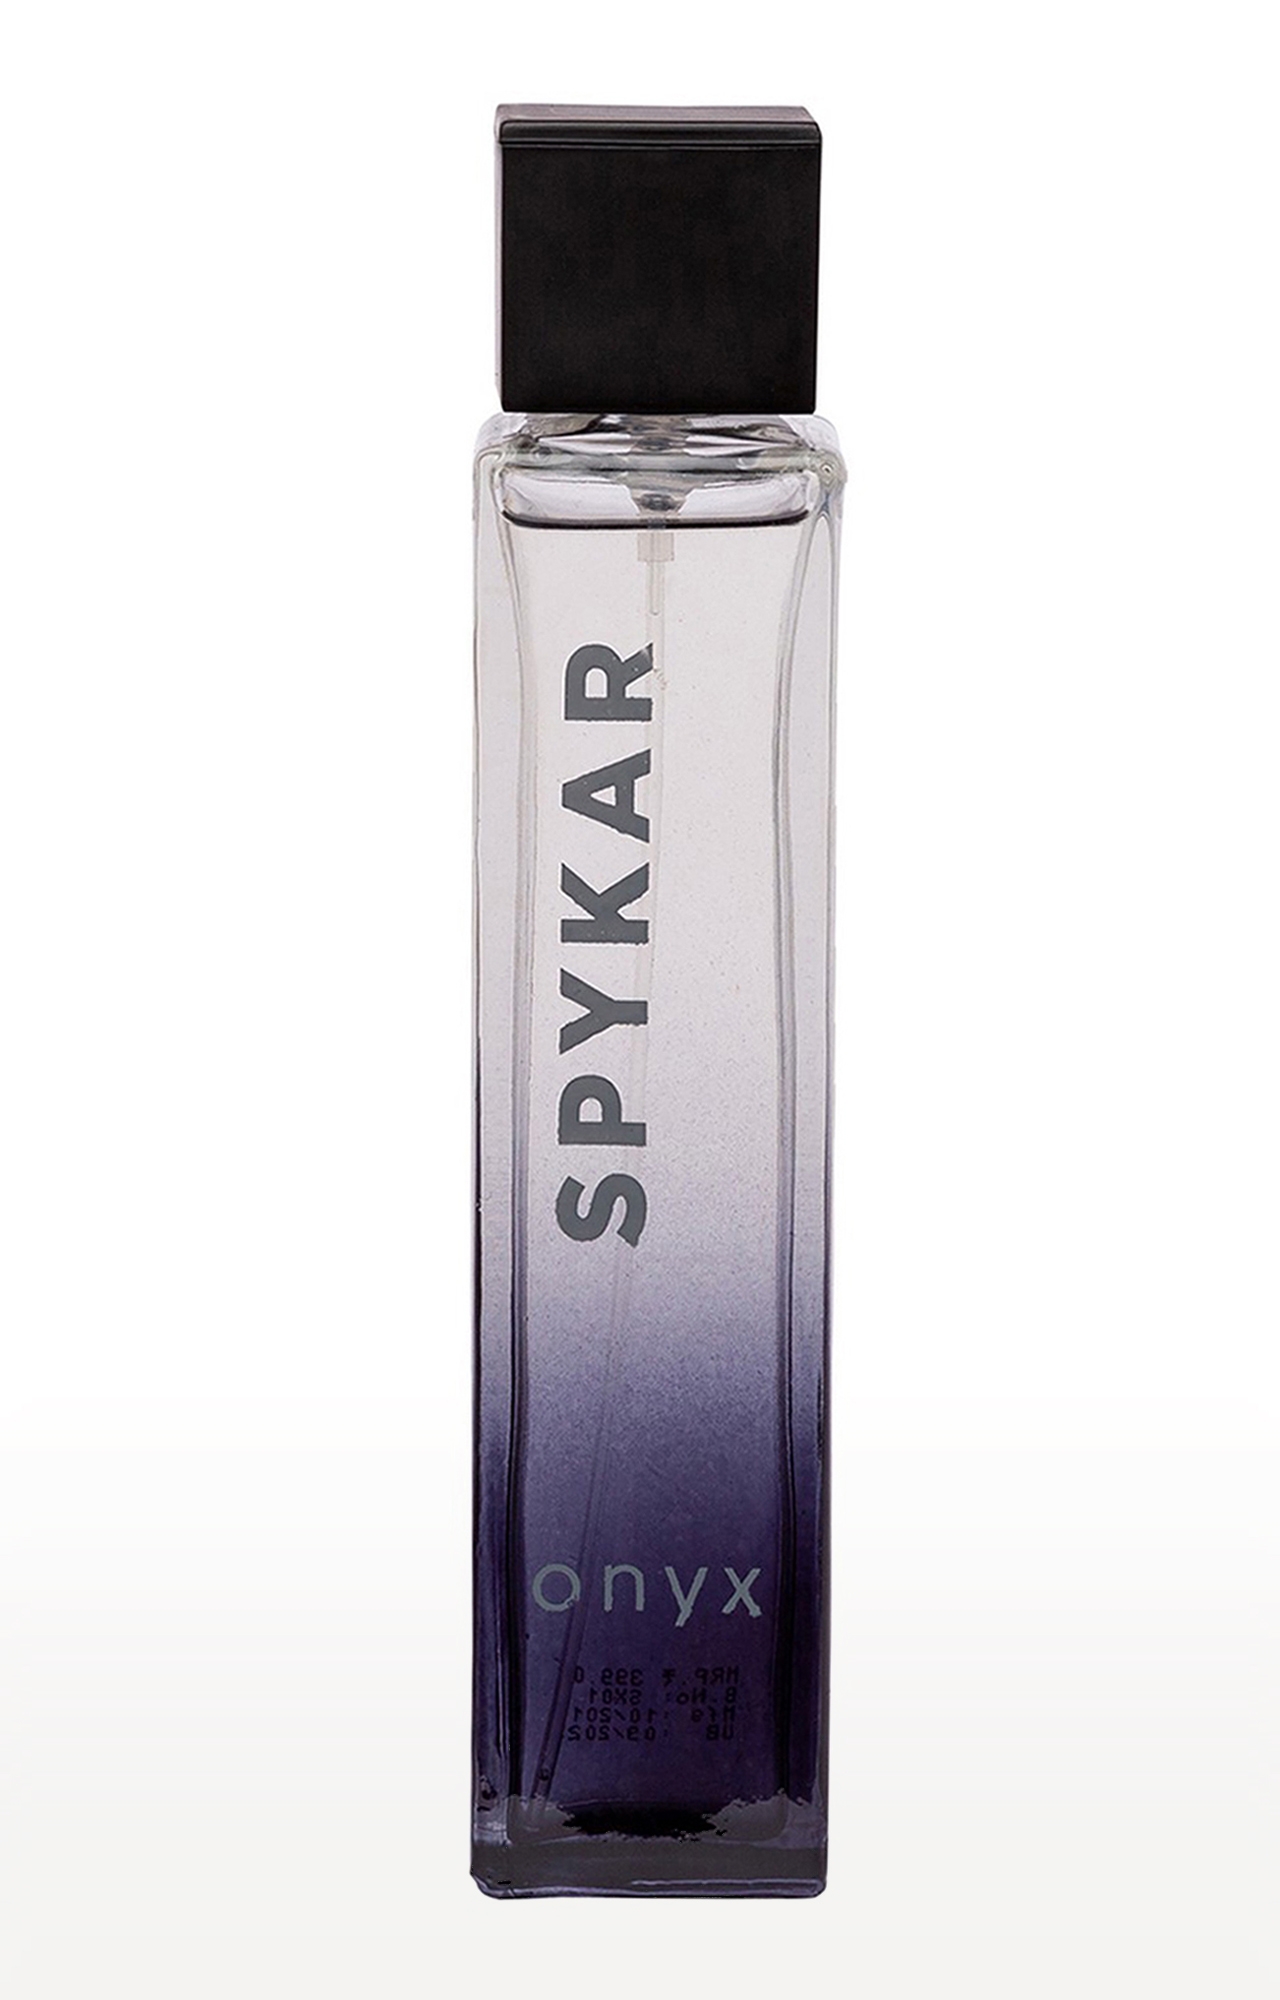 Spykar Blue Onyx Perfume